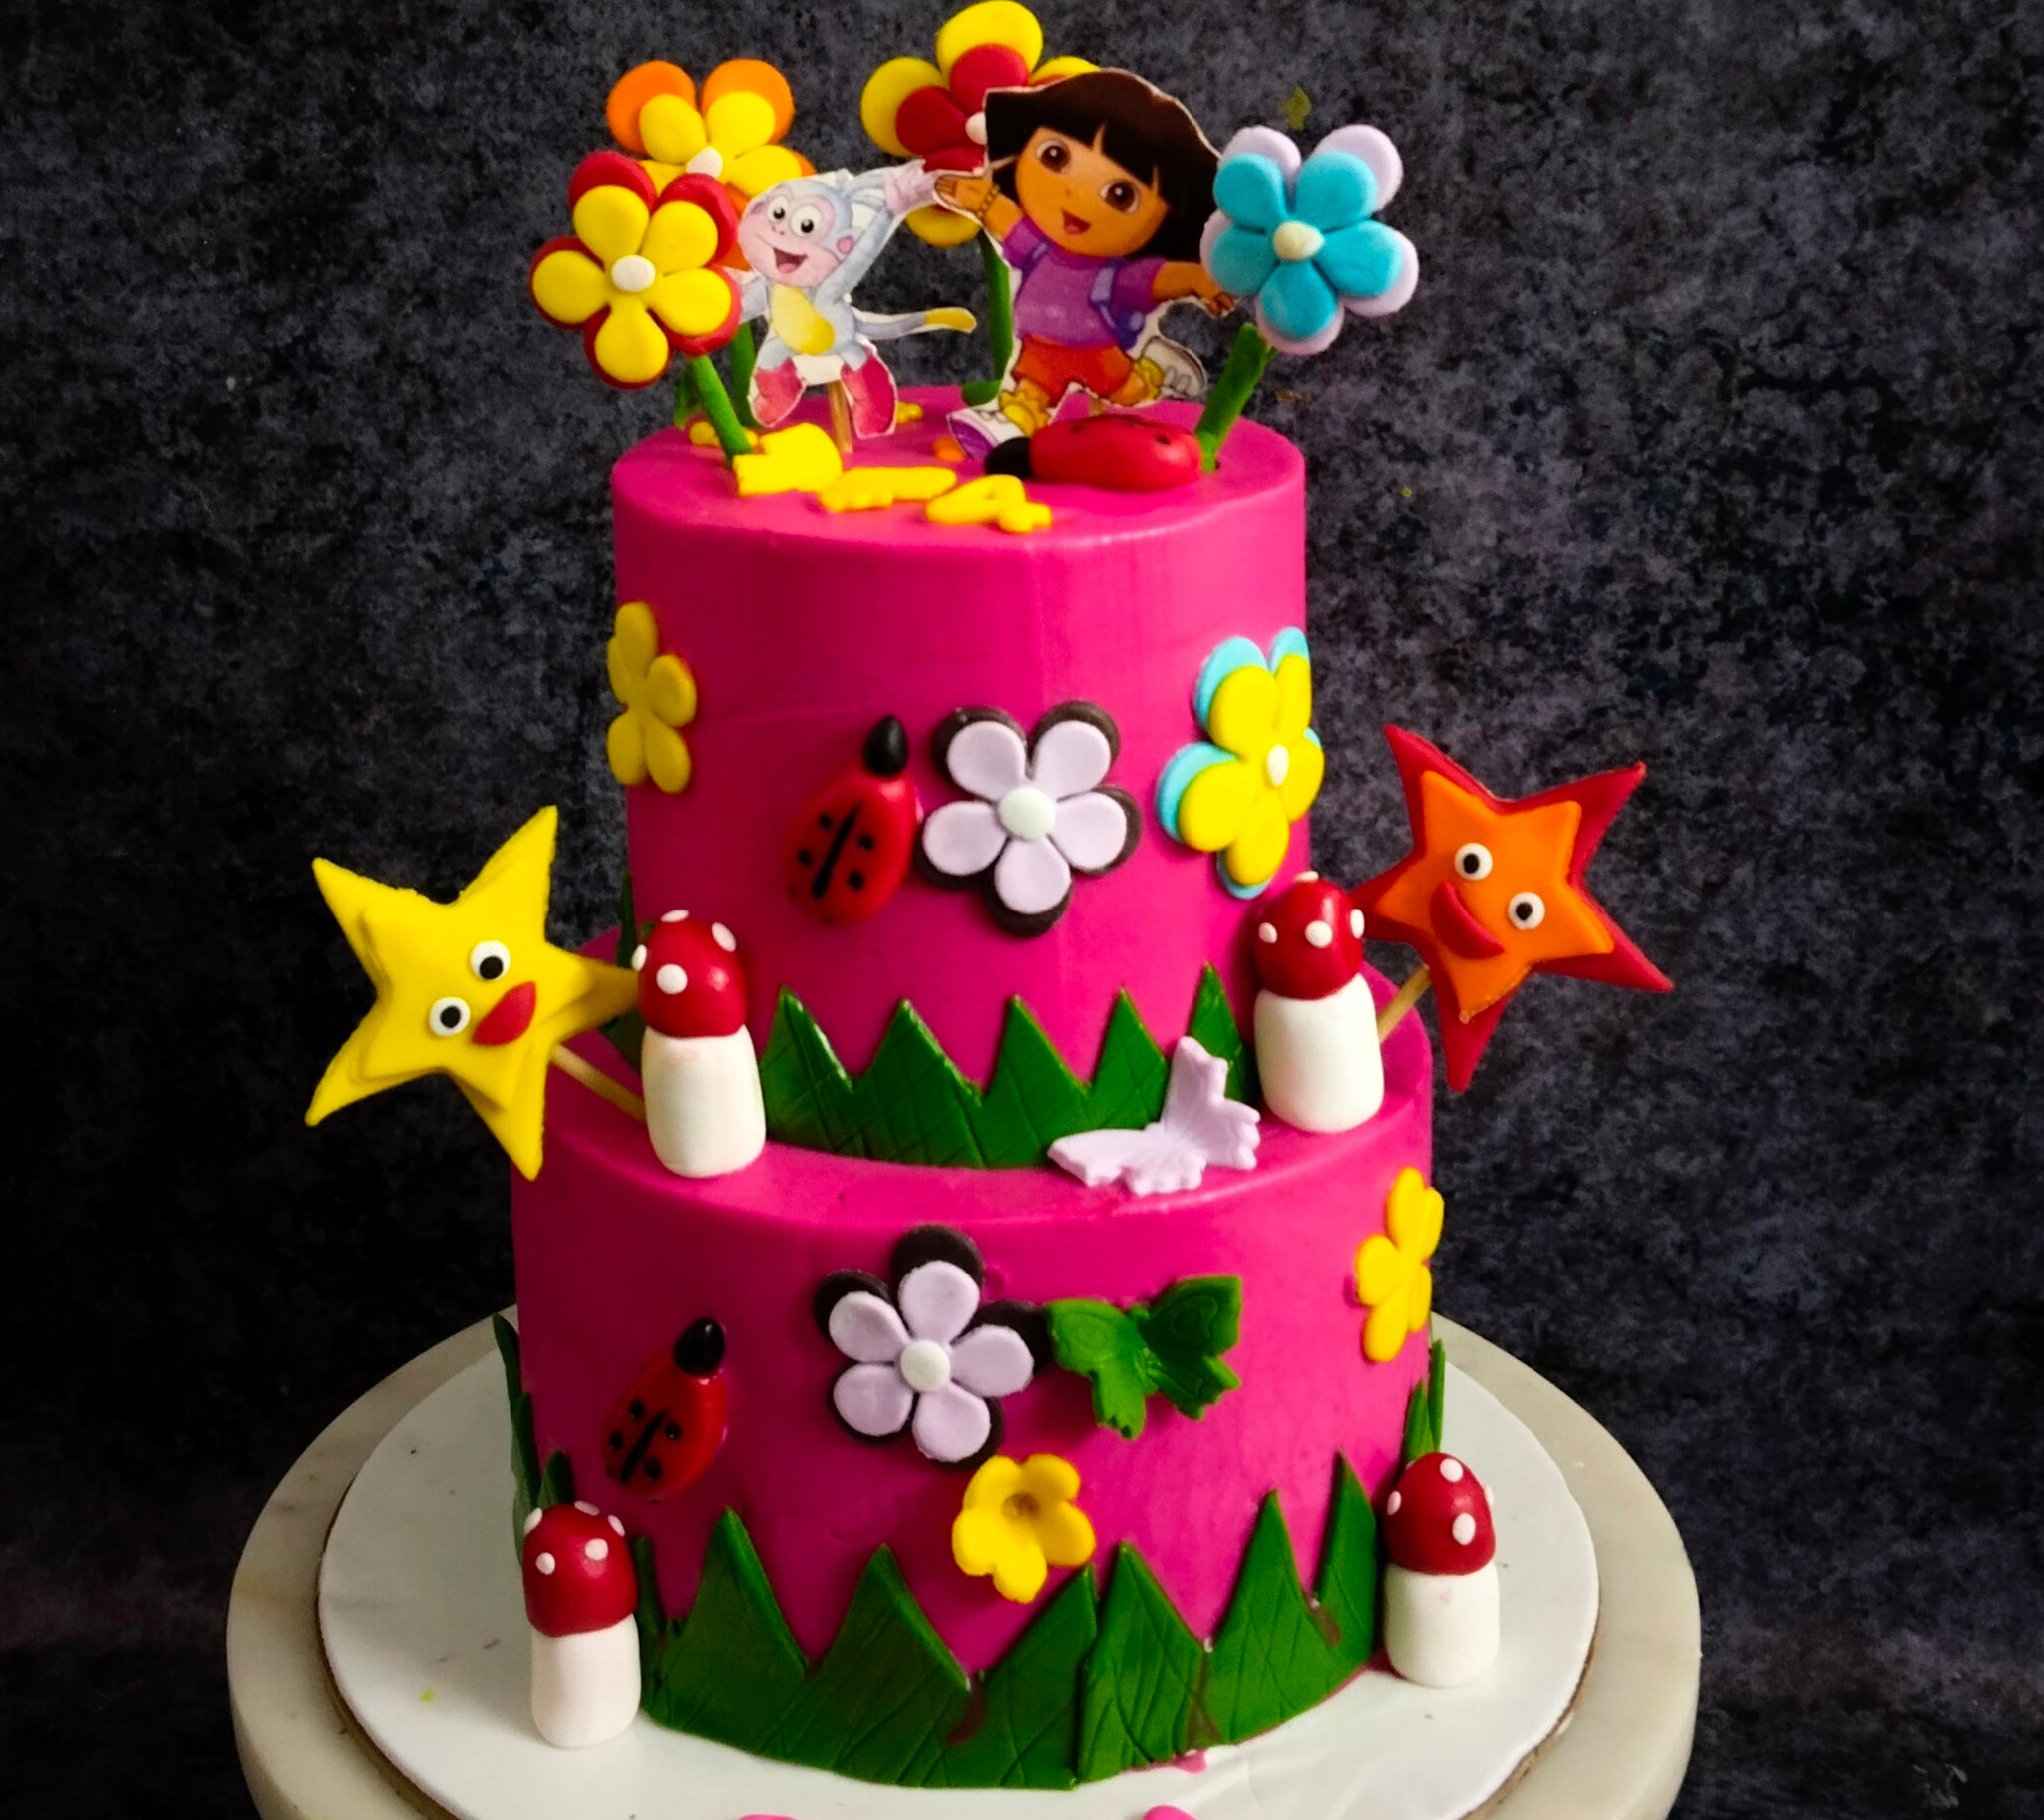 Dora the Explorer Layer Cake | Birthdays